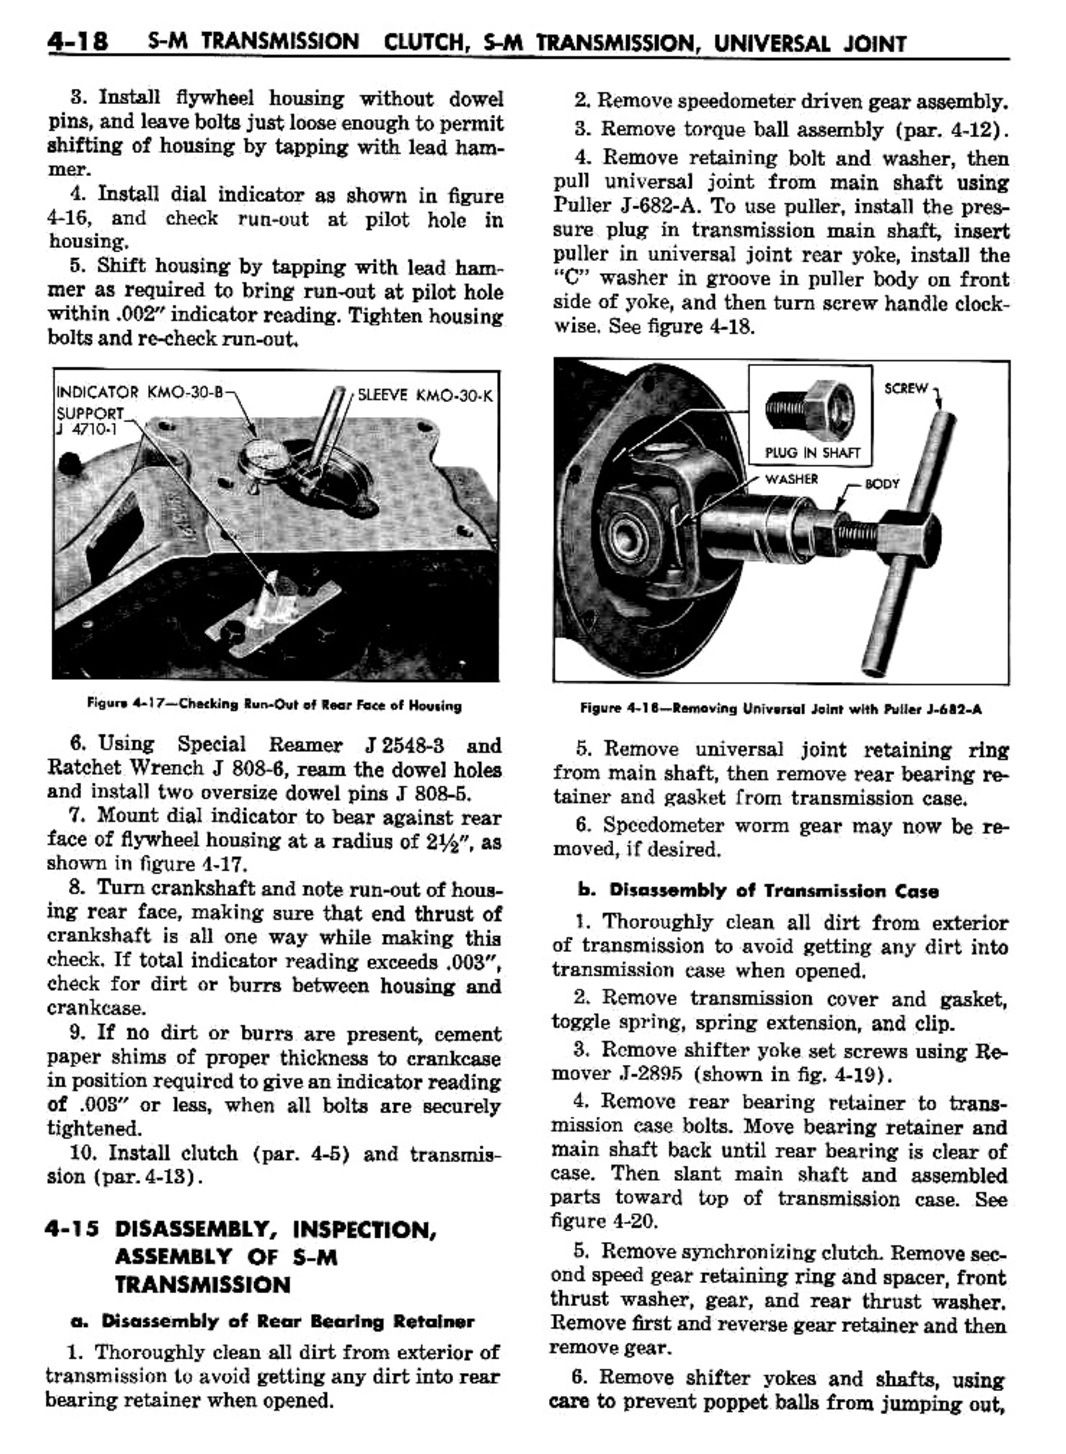 n_05 1957 Buick Shop Manual - Clutch & Trans-018-018.jpg